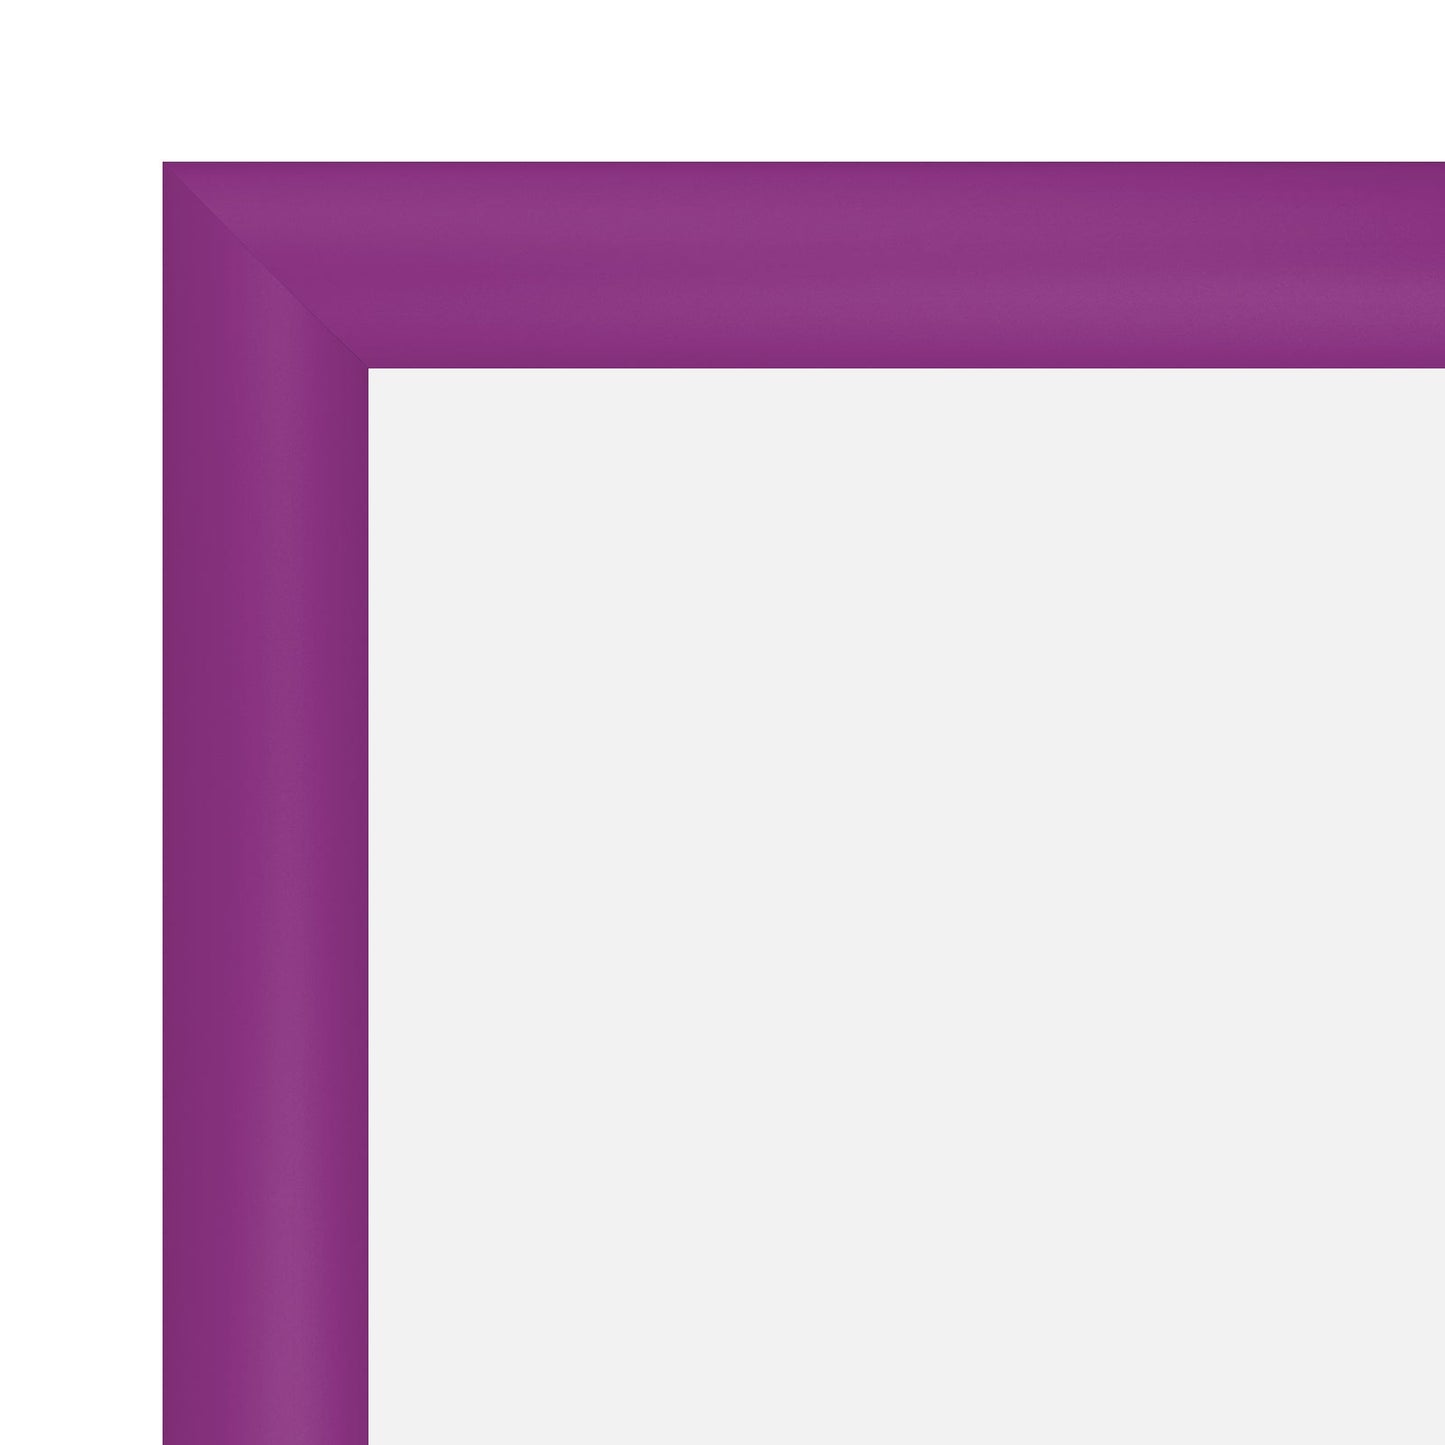 11x17 Purple SnapeZo® Snap Frame - 1.2" Profile - Snap Frames Direct